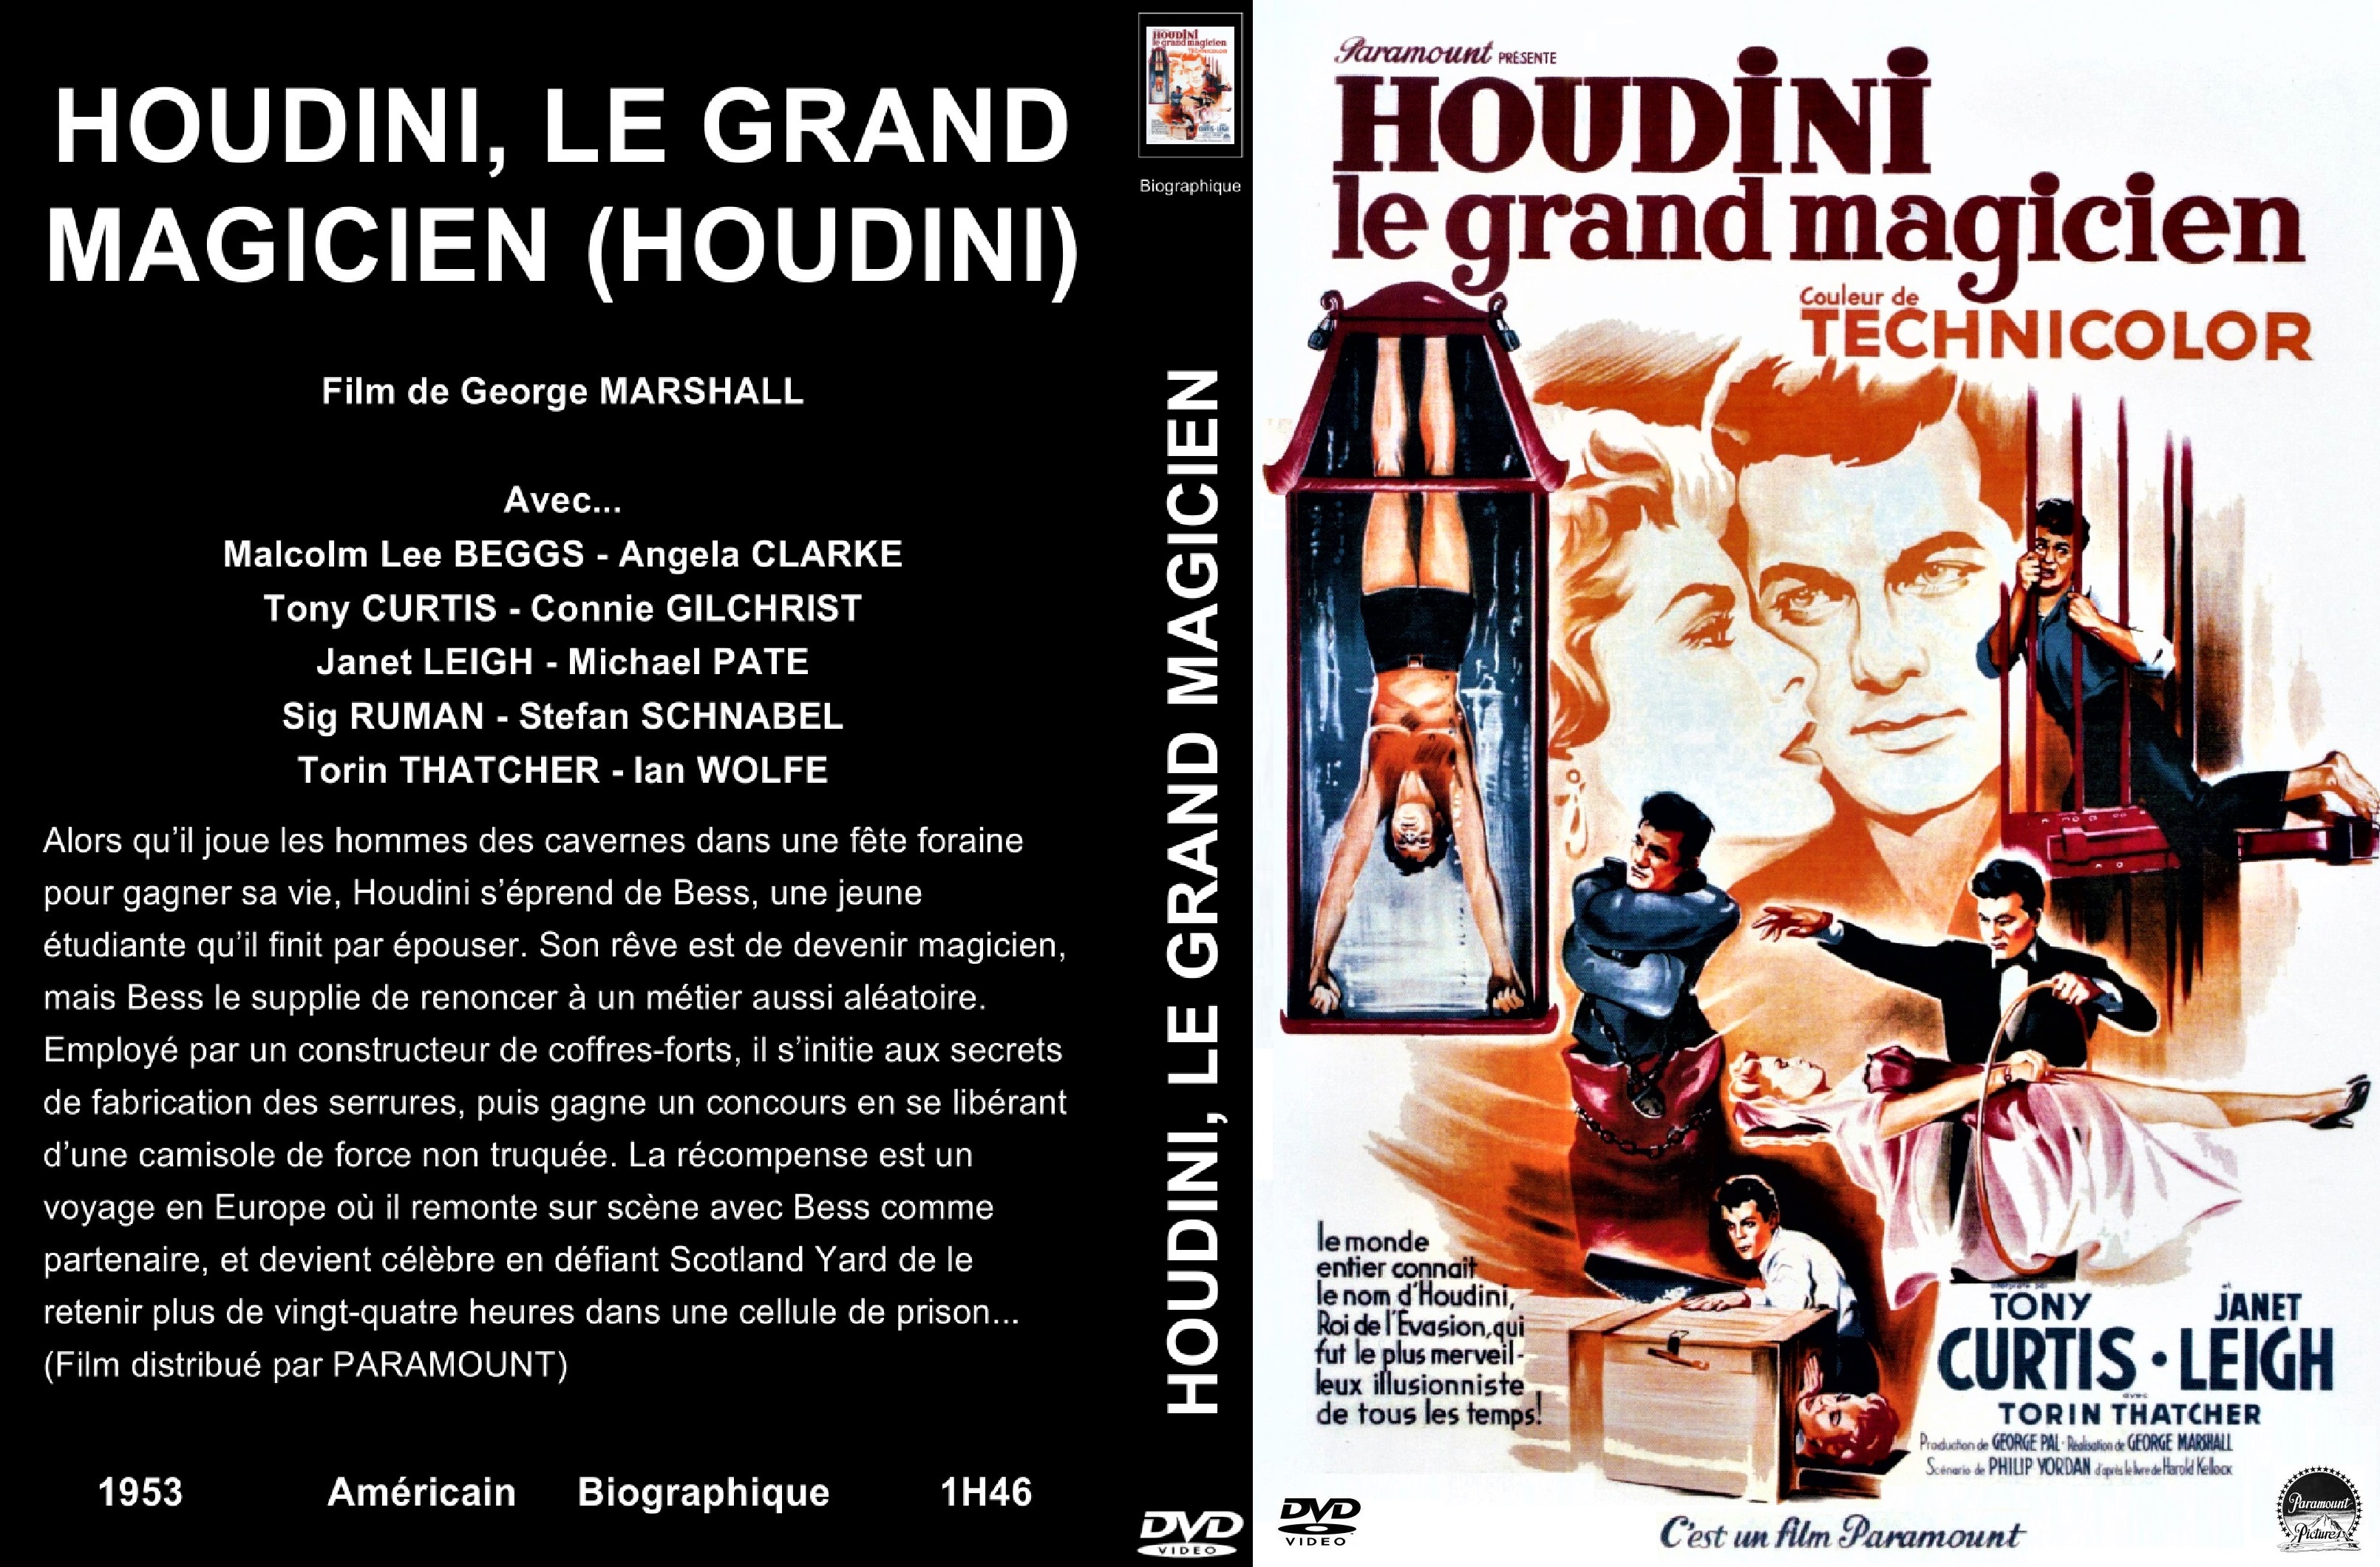 Jaquette DVD Houdini le grand magicien custom